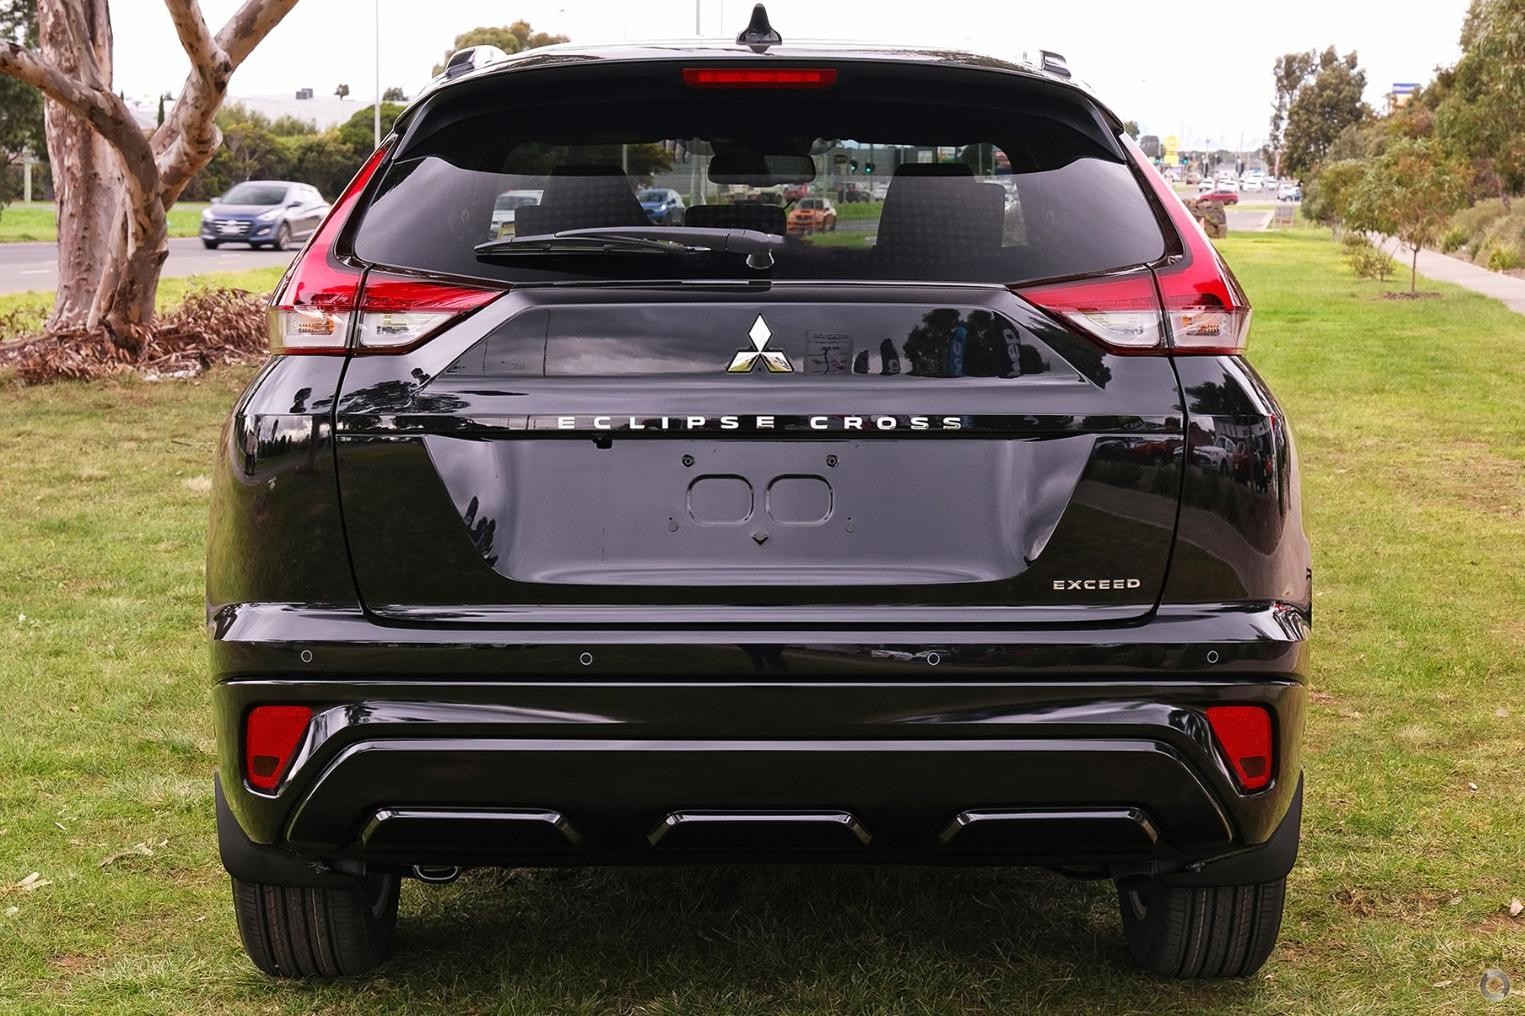 Mitsubishi Eclipse Cross image 3